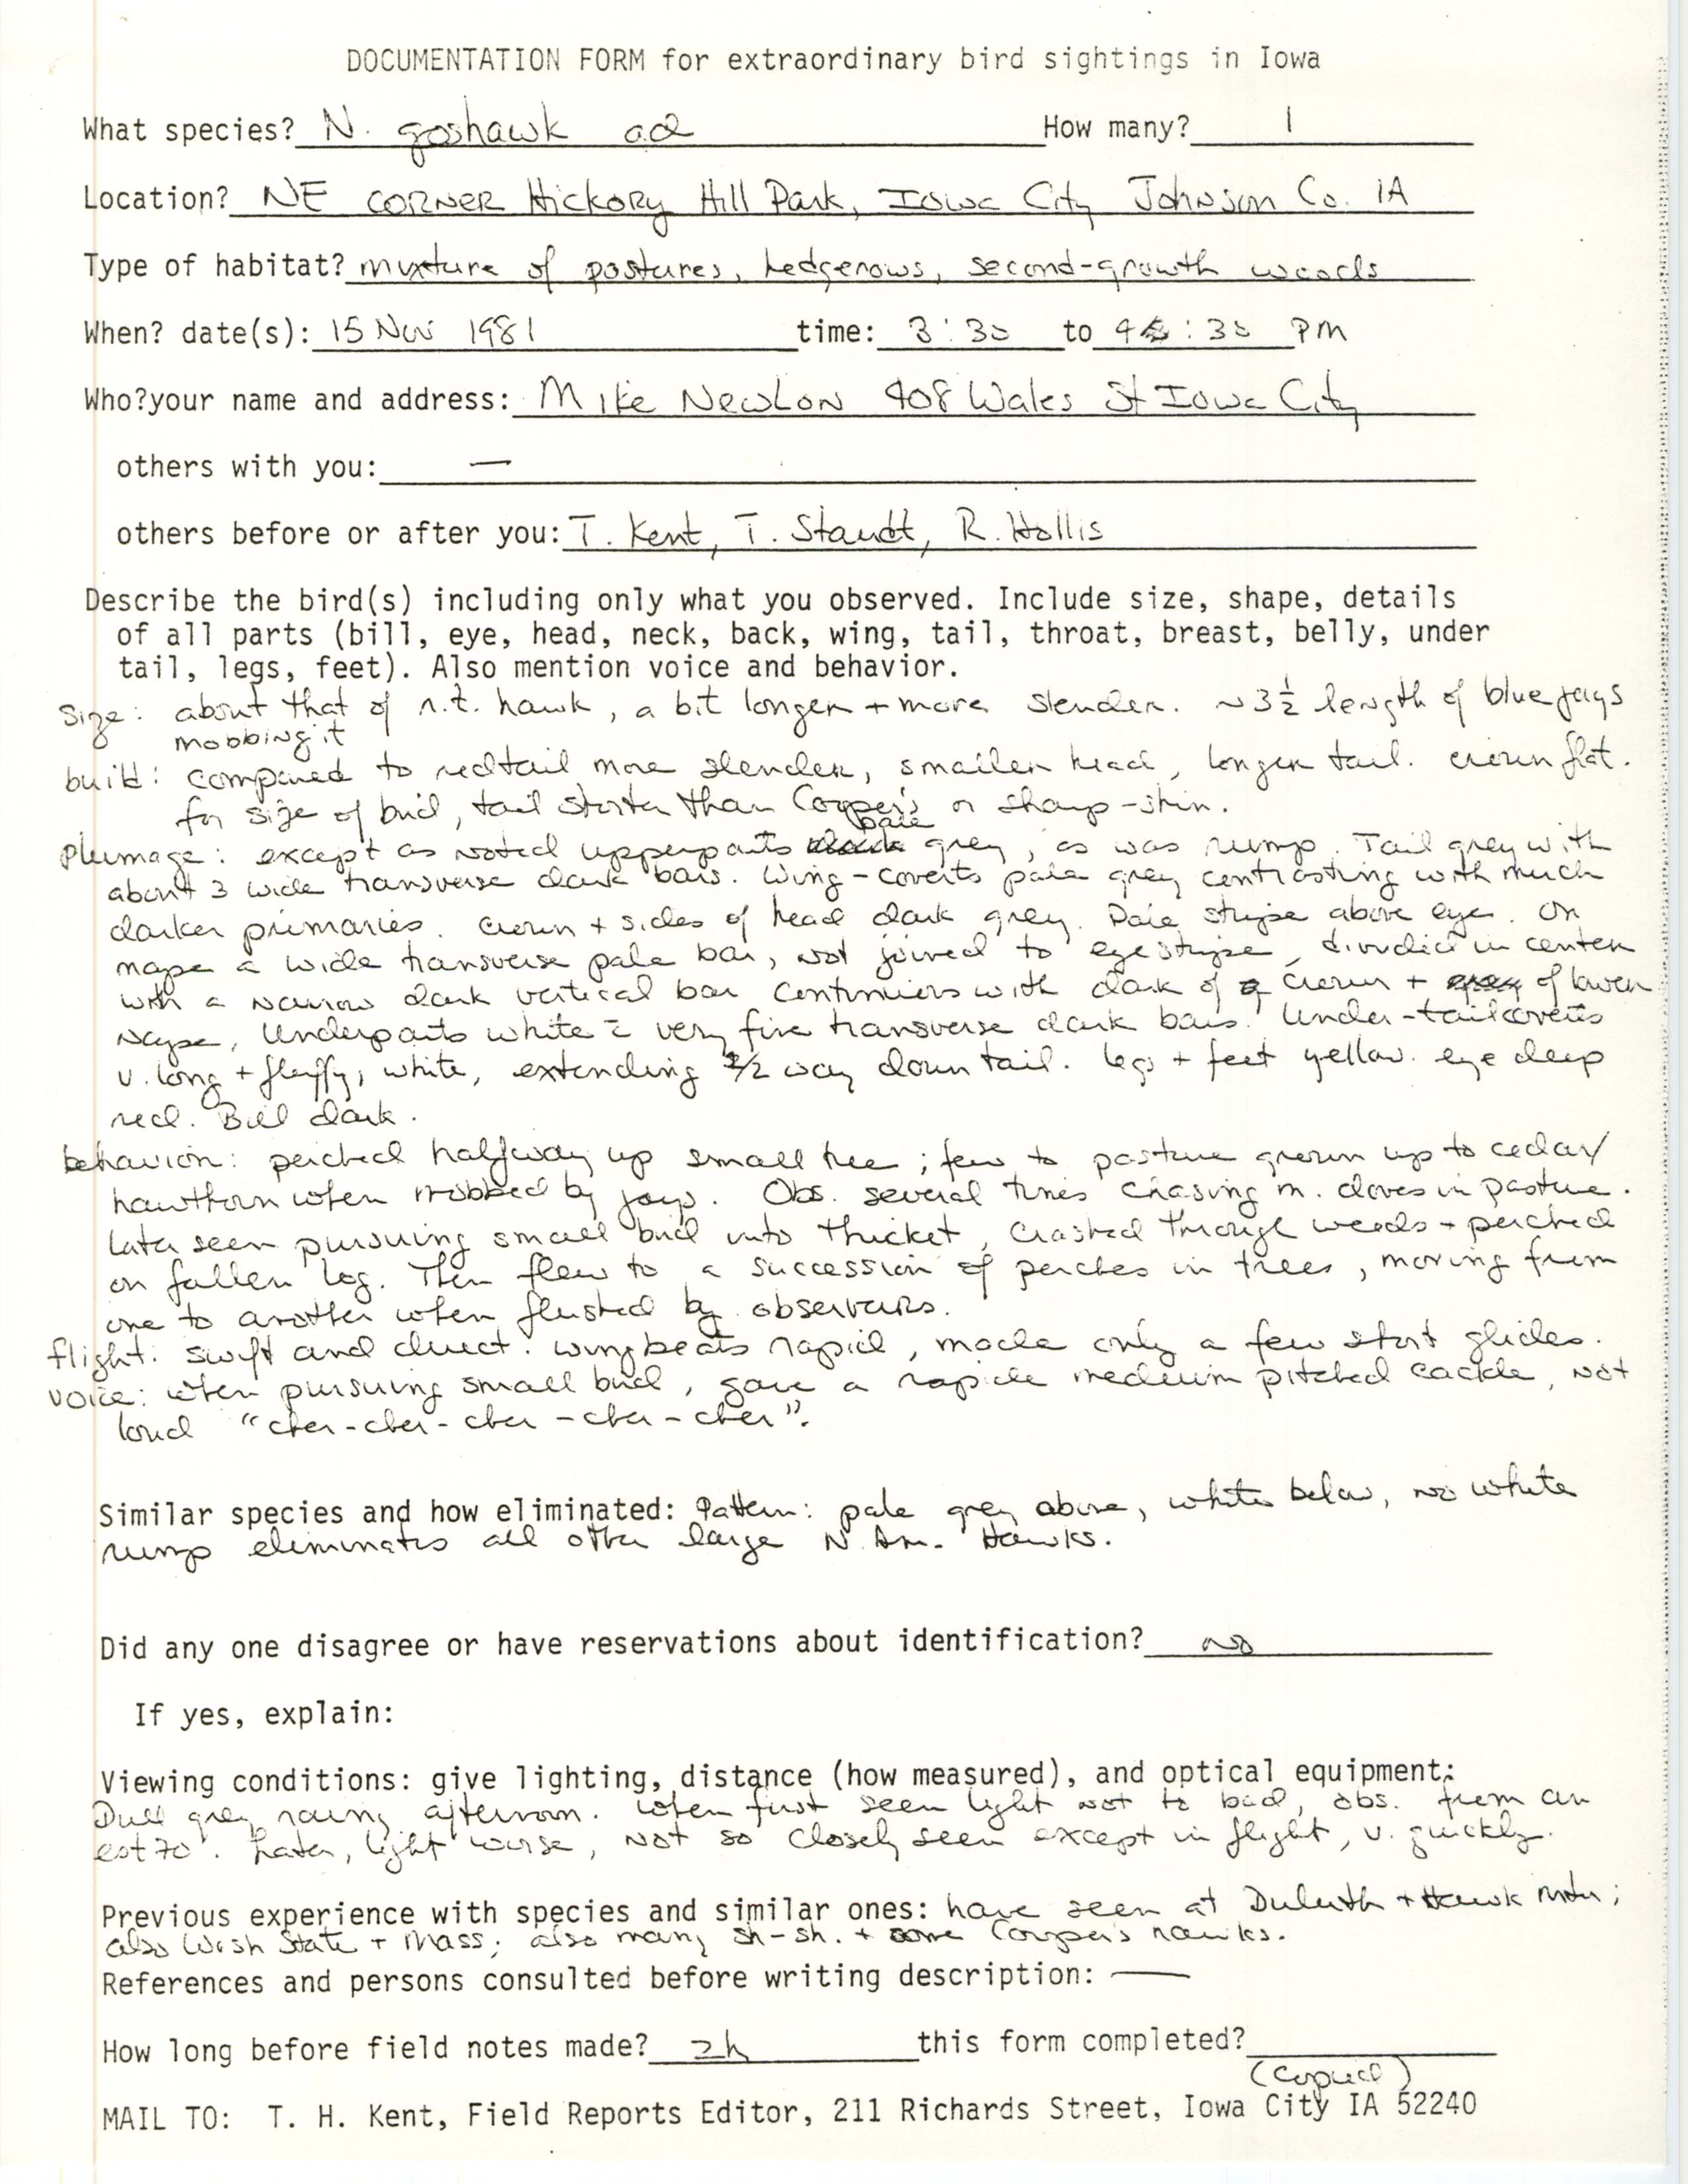 Rare bird documentation form for Northern Goshawk at Hickory Hill Park, 1981